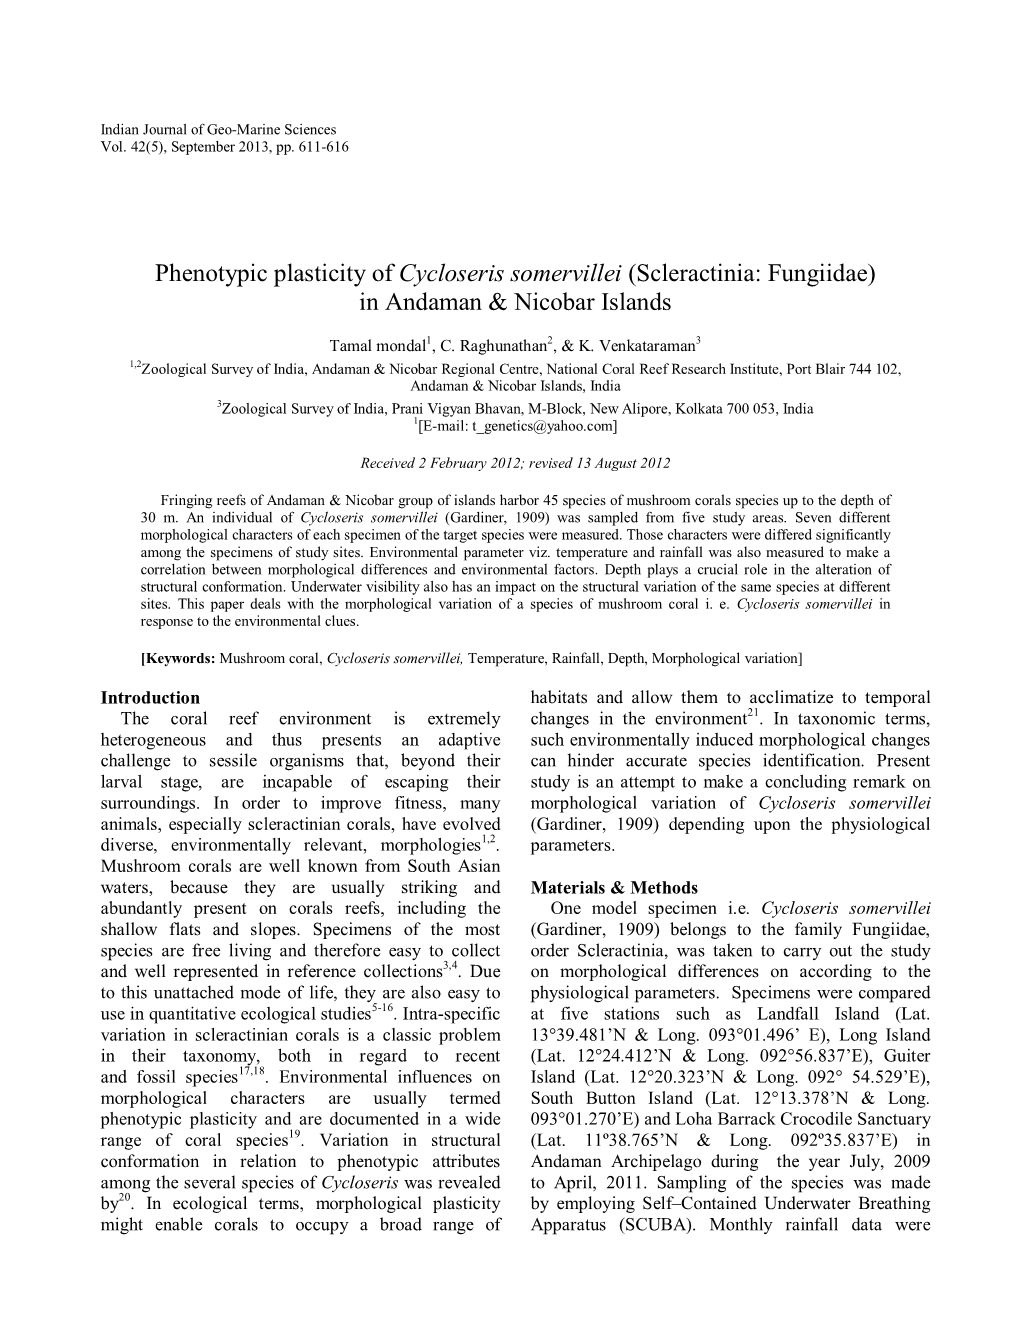 Phenotypic Plasticity of Cycloseris Somervillei (Scleractinia: Fungiidae) in Andaman & Nicobar Islands